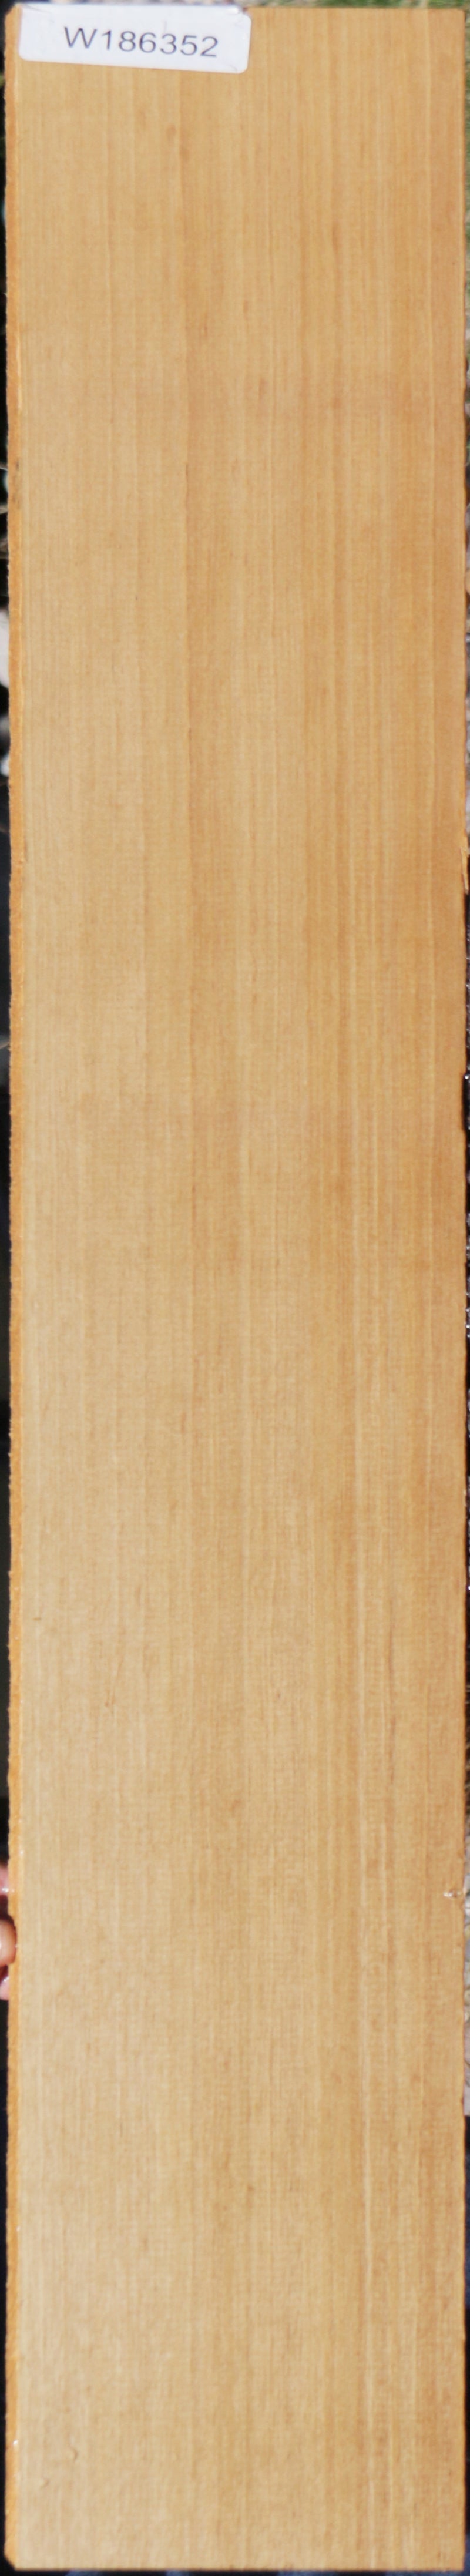 Aniegre Lumber